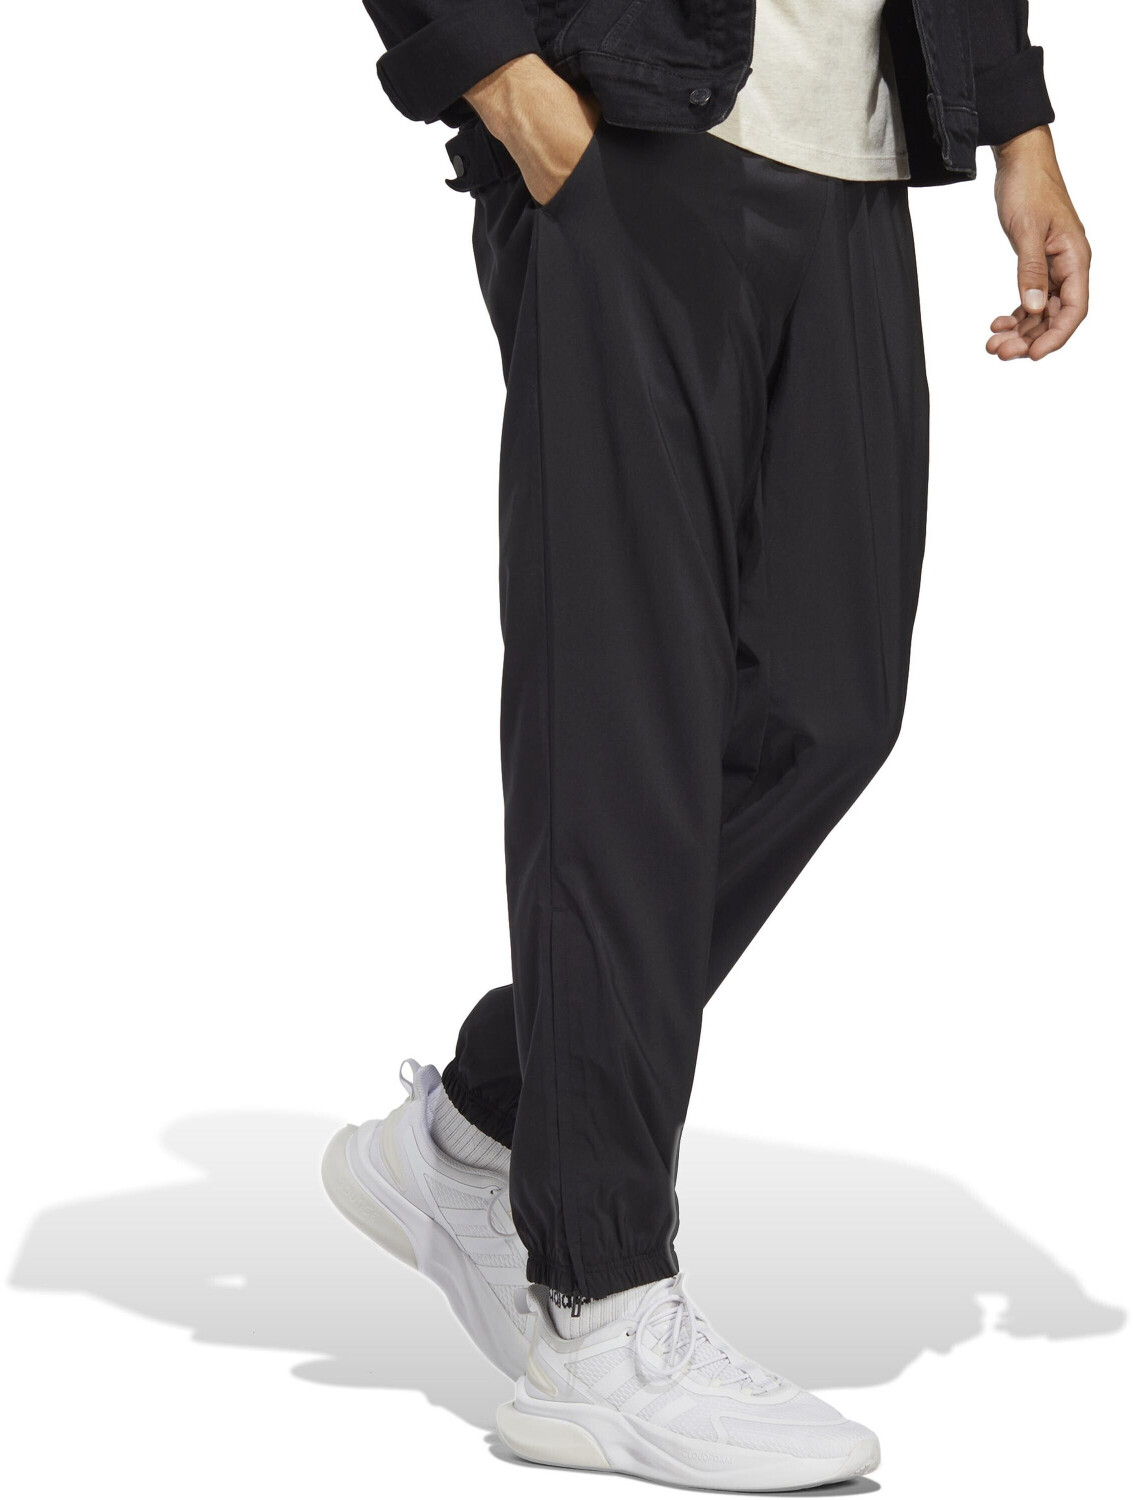 Adidas AEROREADY Essentials Stanford Track Pants Mens black  SPORTFIRST  NAMBUCCA